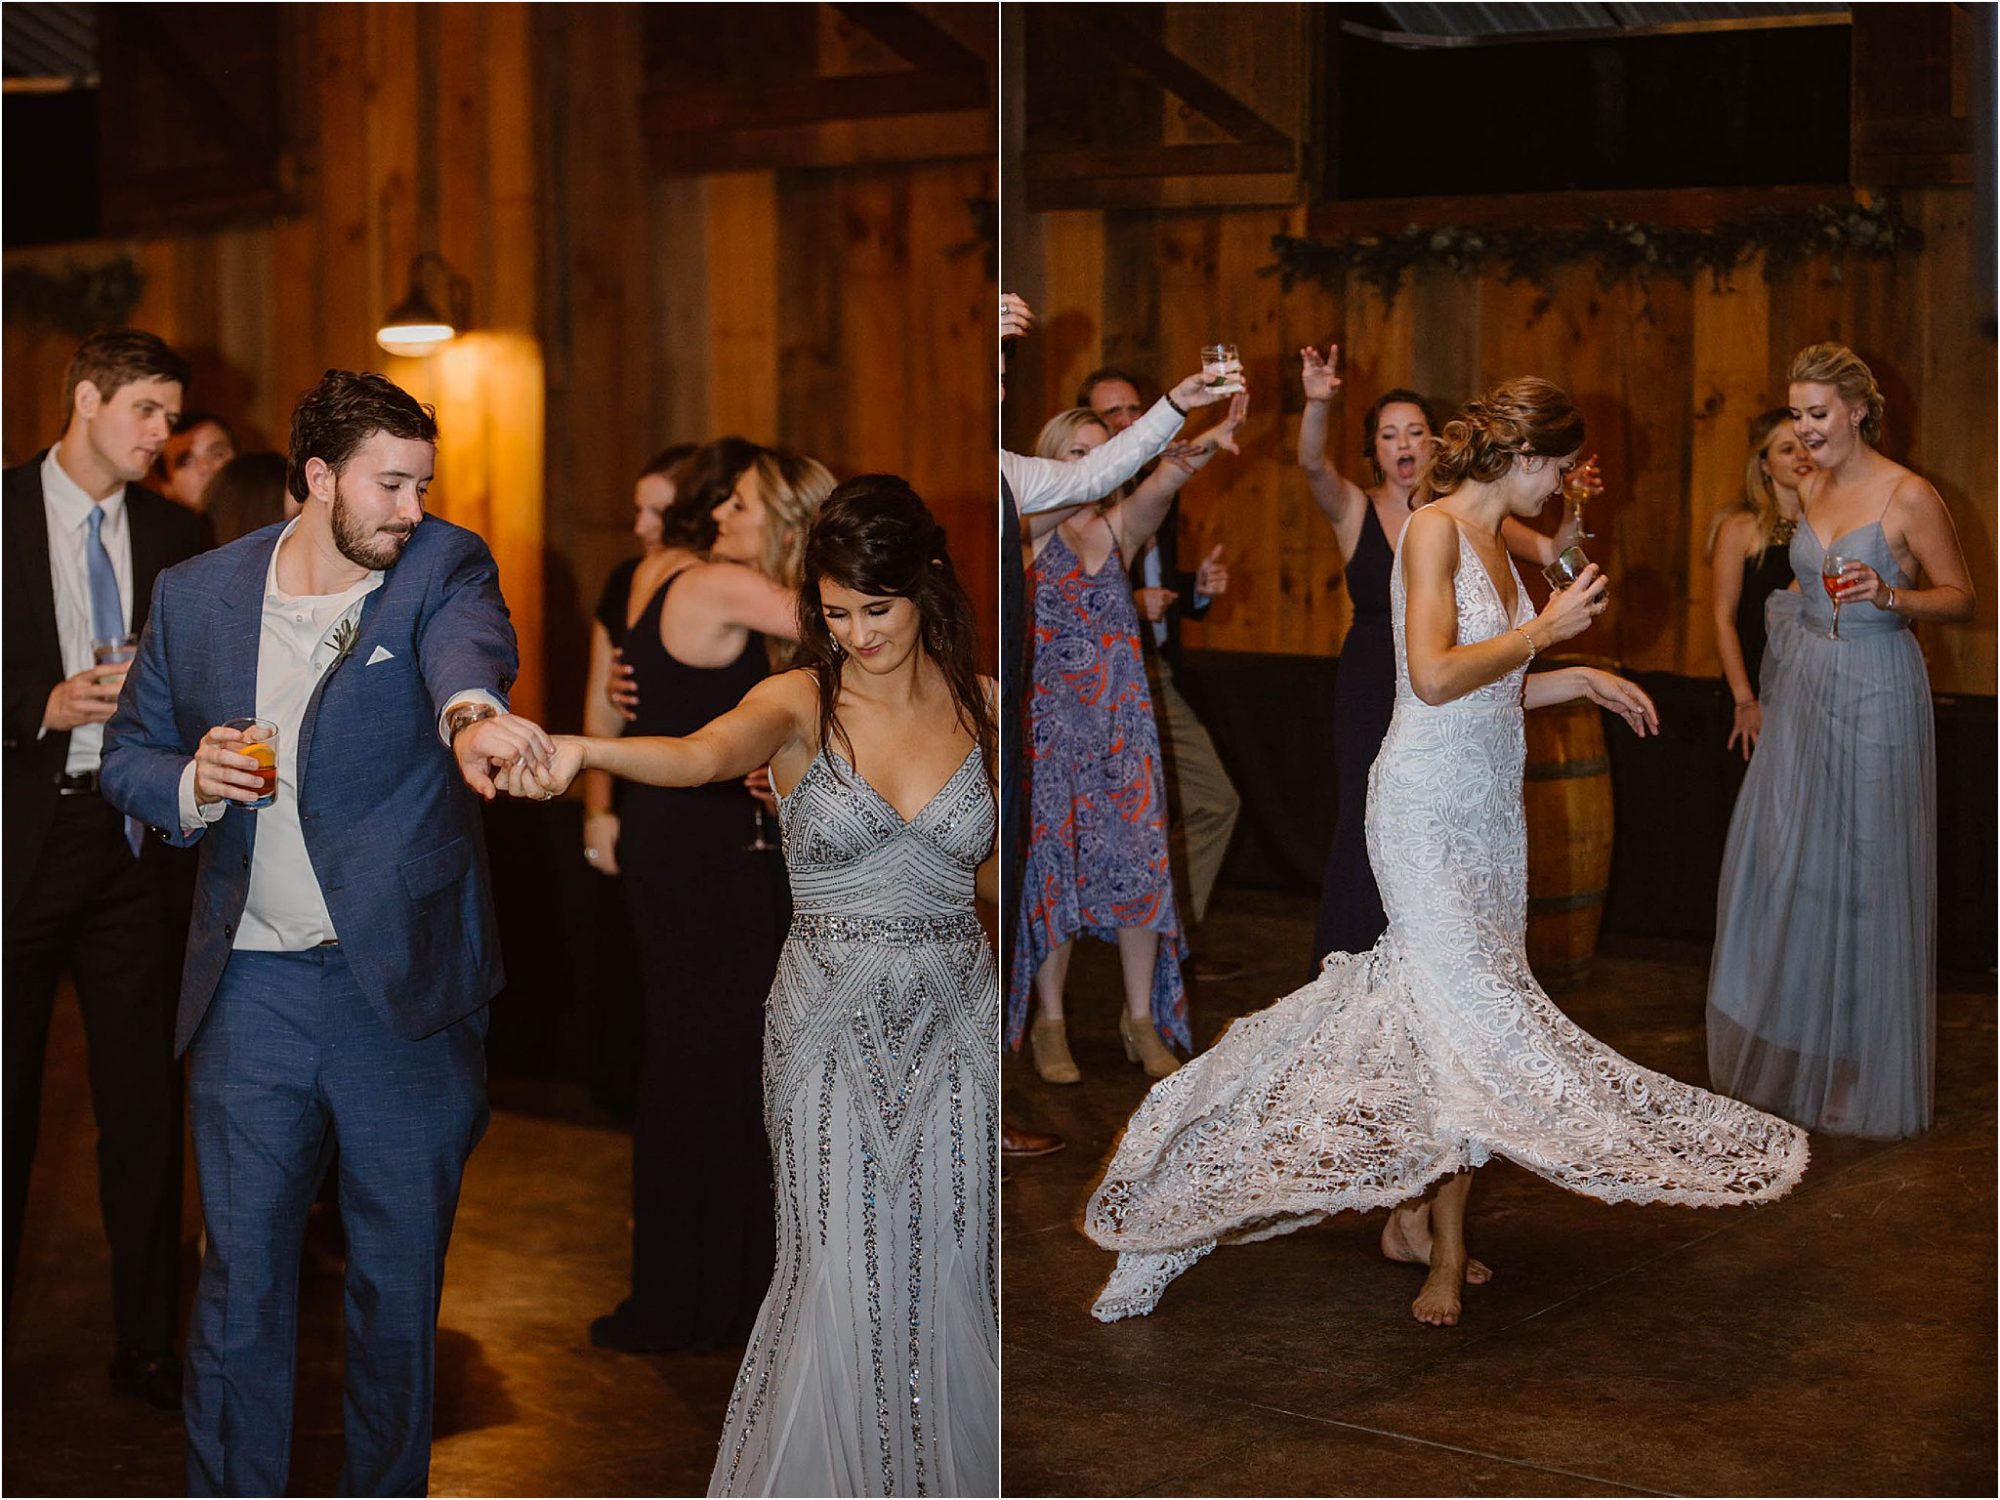 reception dancing photos at wedding reception